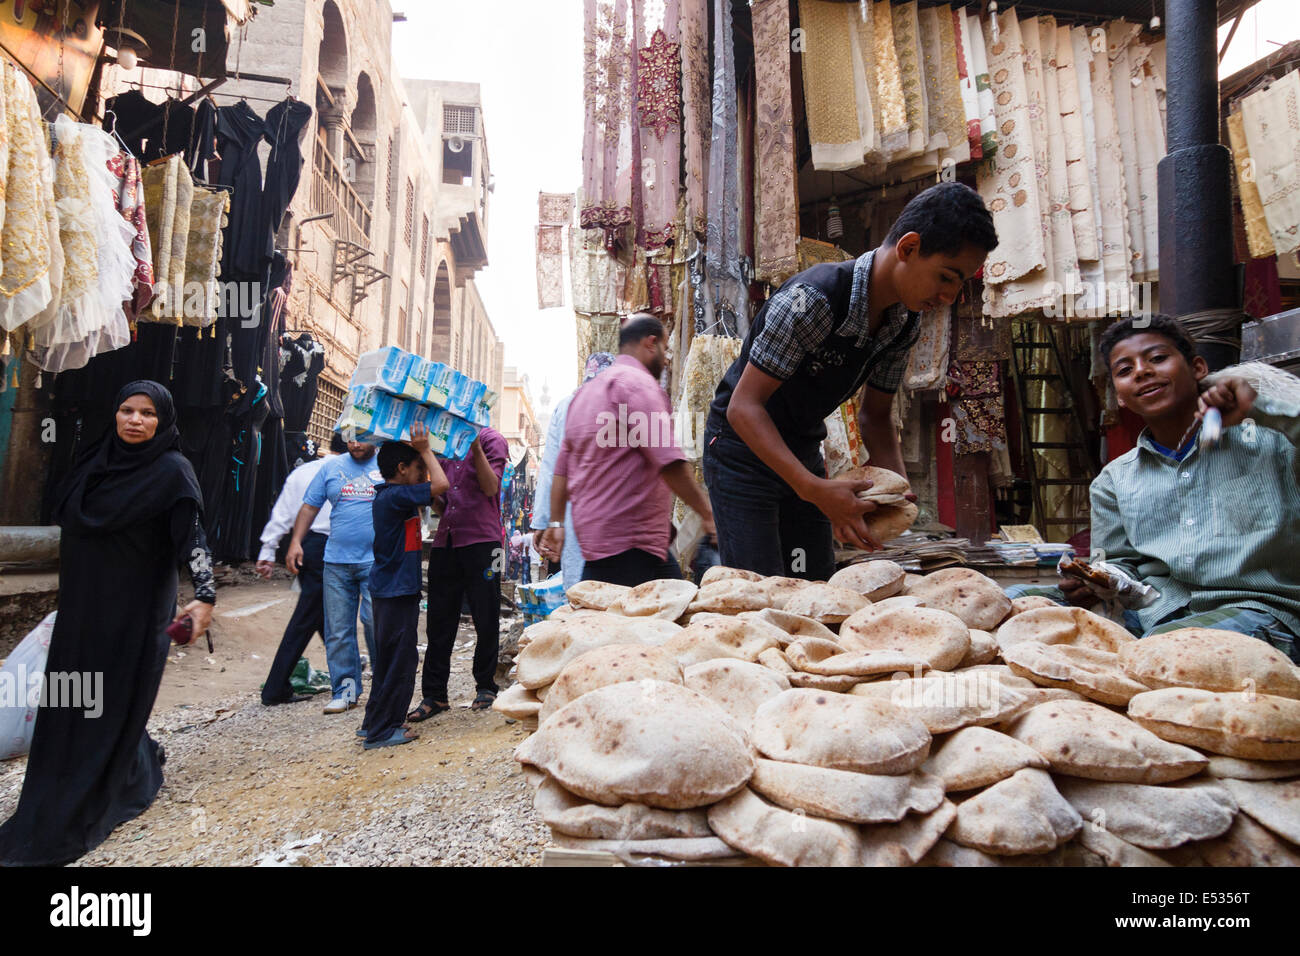 Bazaar street scene with child selling bread. Islamic Cairo, Egypt Stock Photo